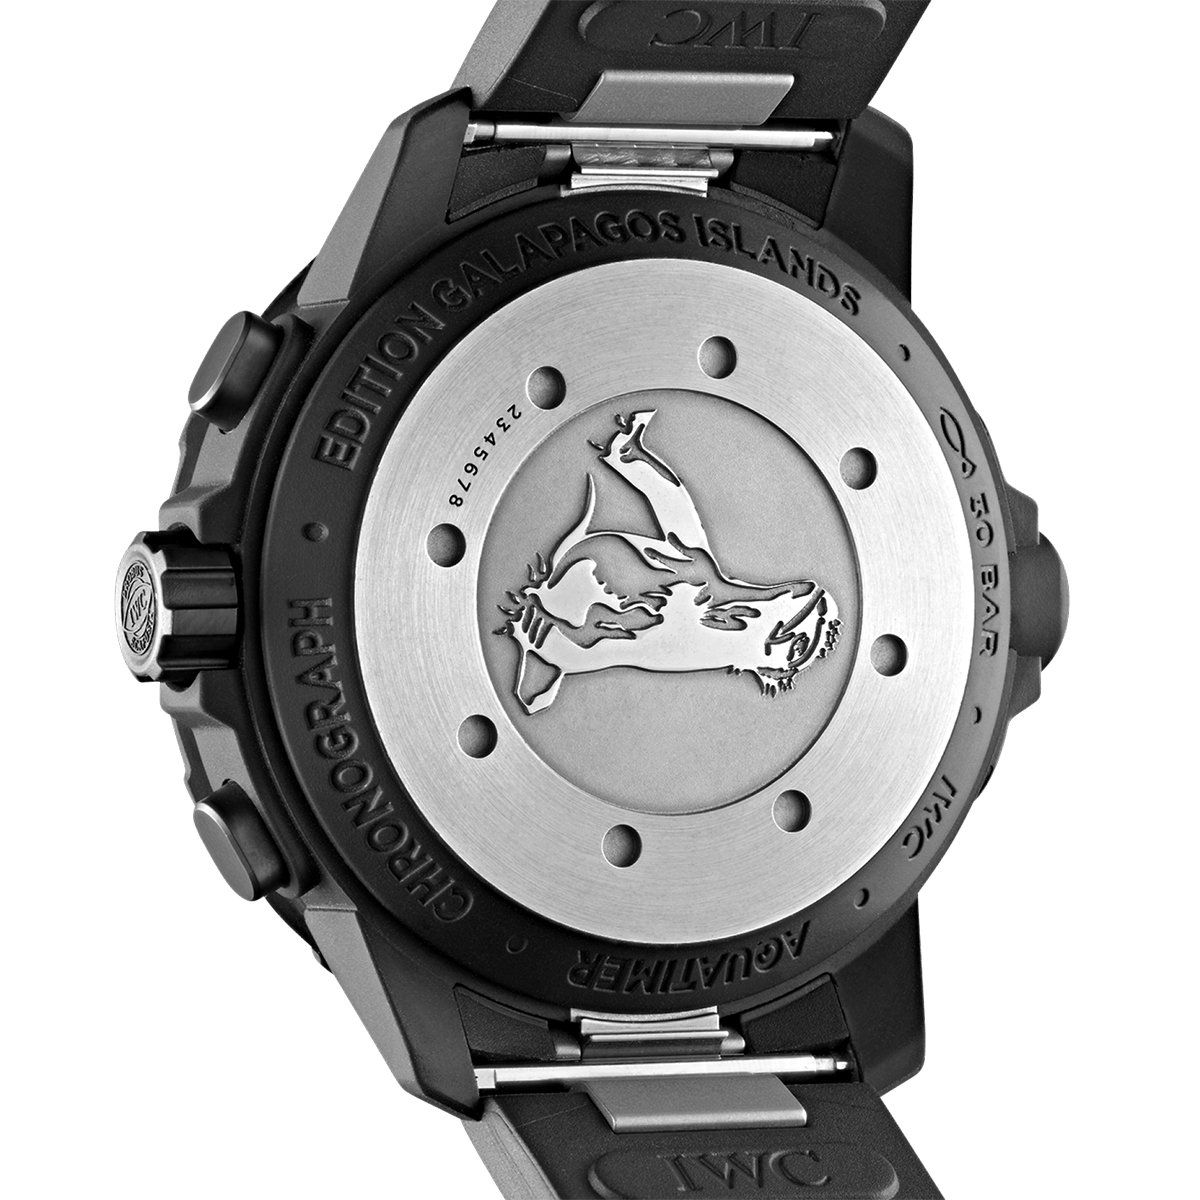 Aquatimer Chronograph Edition “Galapagos Islands” 45mm Watch